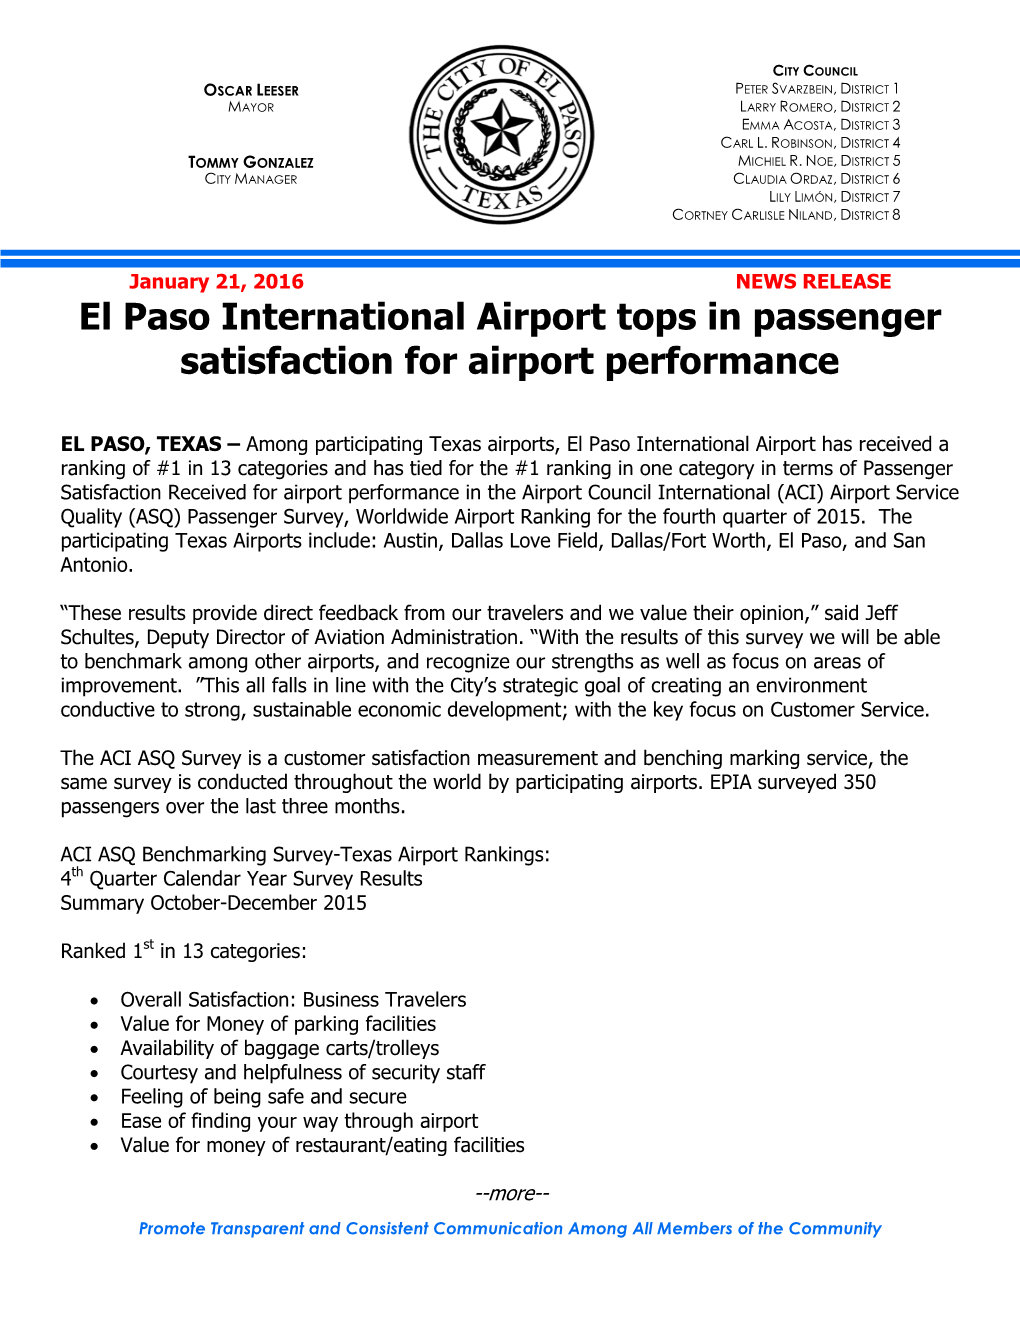 El Paso International Airport Tops in Passenger Satisfaction for Airport Performance